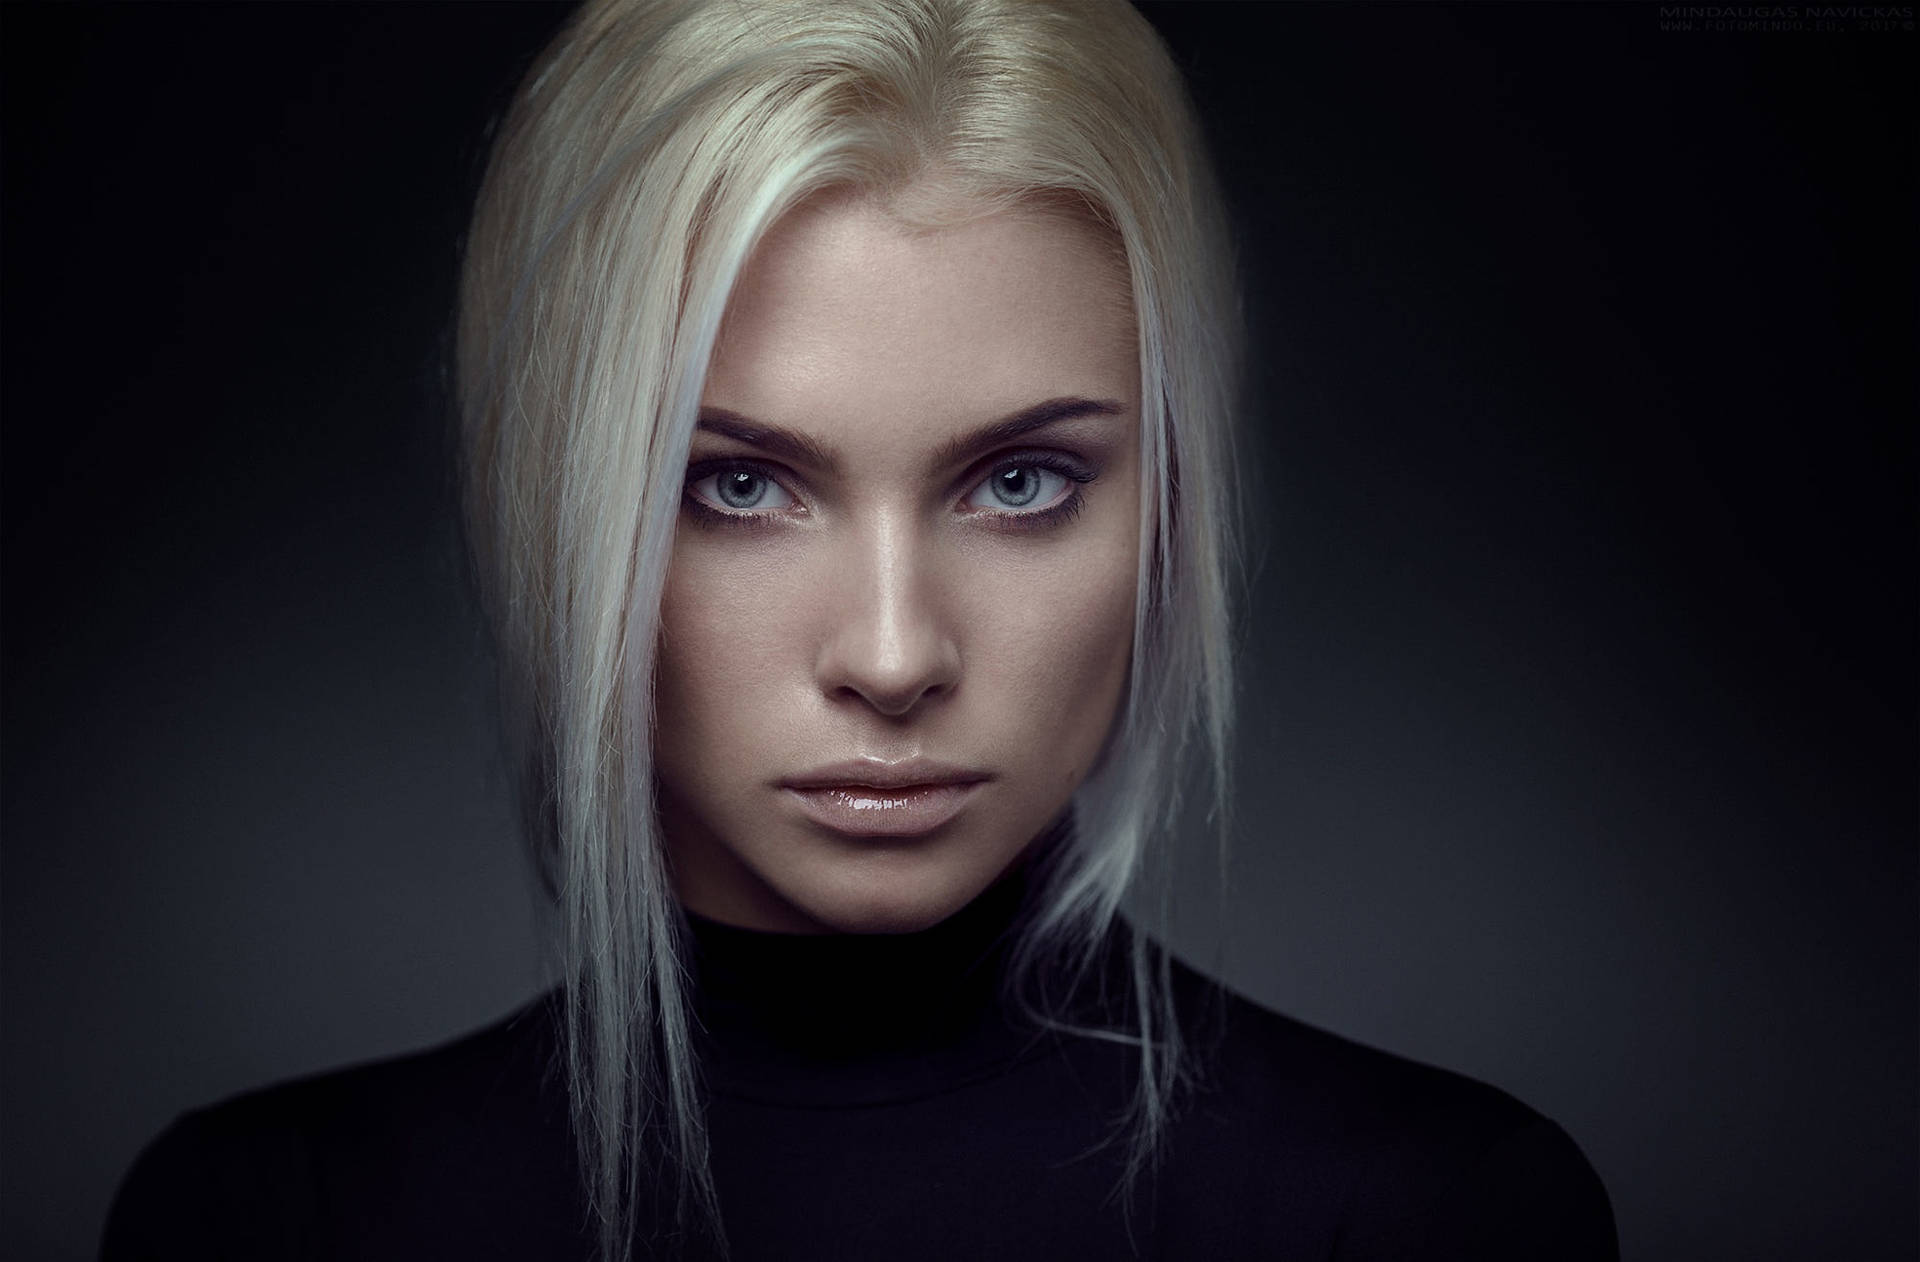 Captivating Blonde Female Model in Black and White Wallpaper